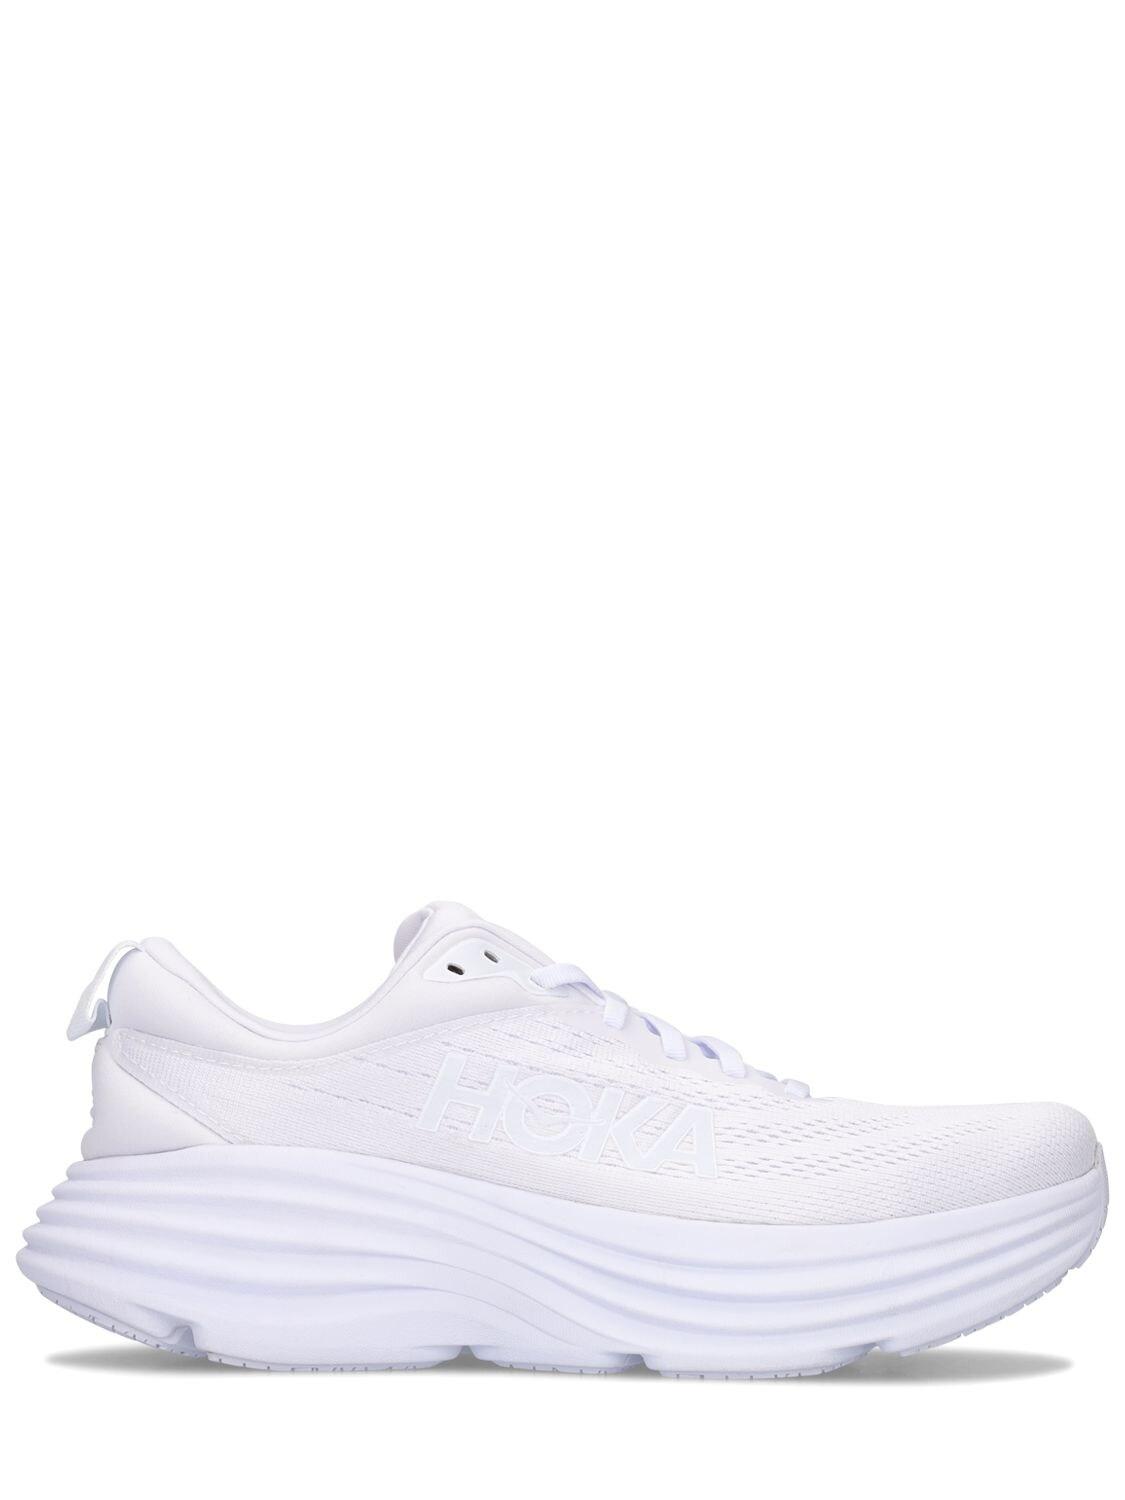 Hoka One One Bondi 8 Lifestyle Sneakers in White | Lyst